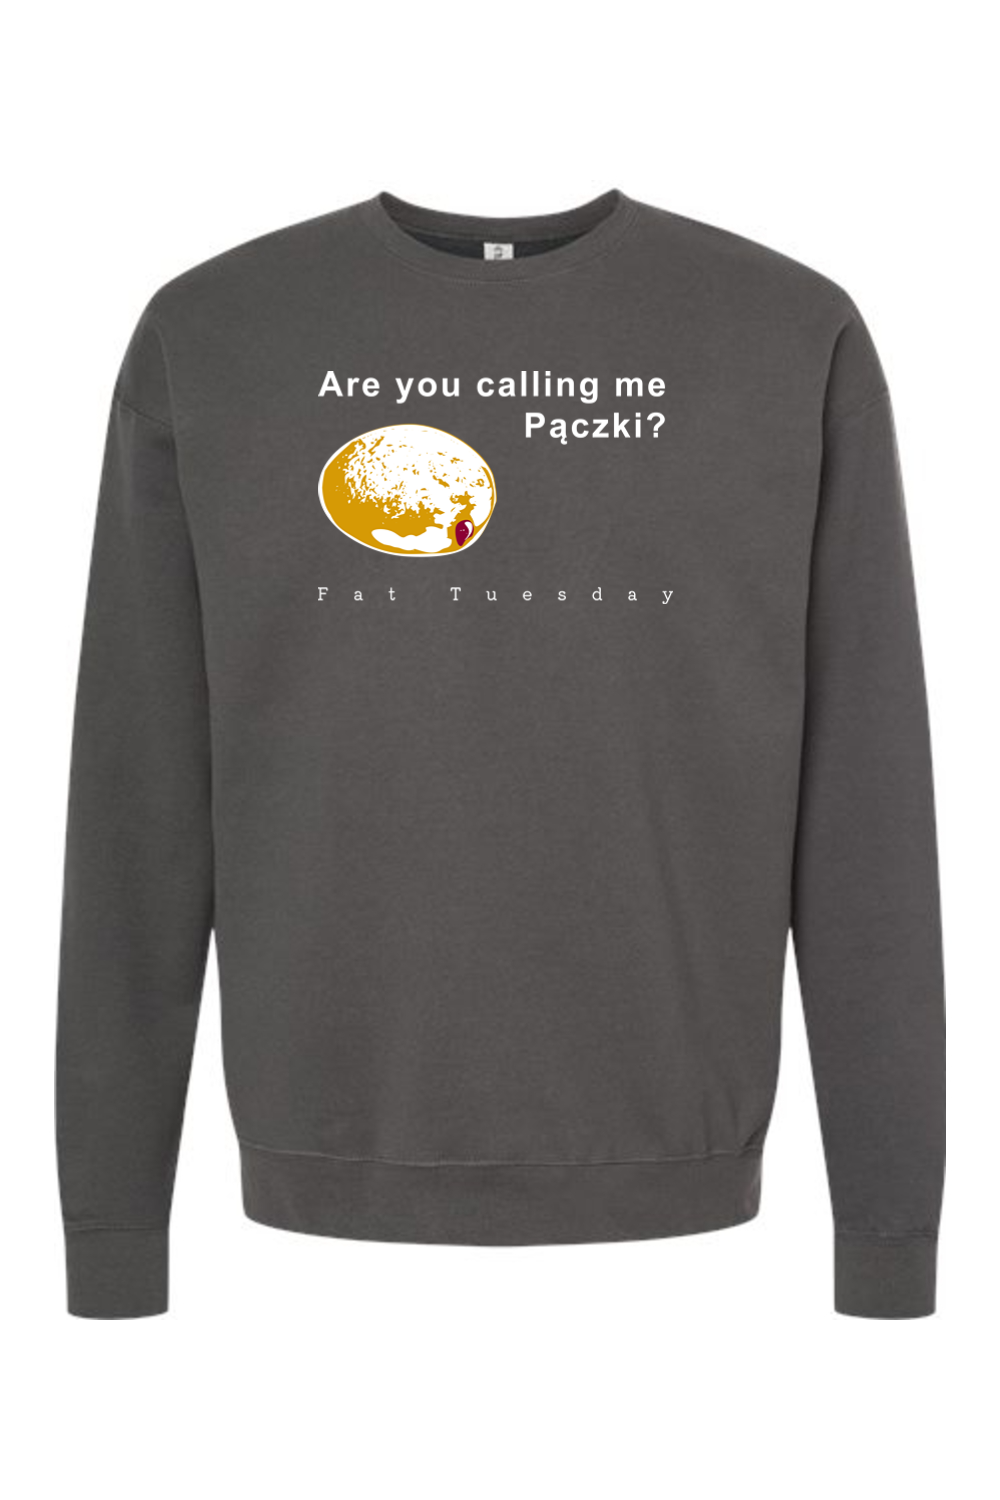 Are you calling me Paczki - Fat Tuesday Crewneck Sweatshirt